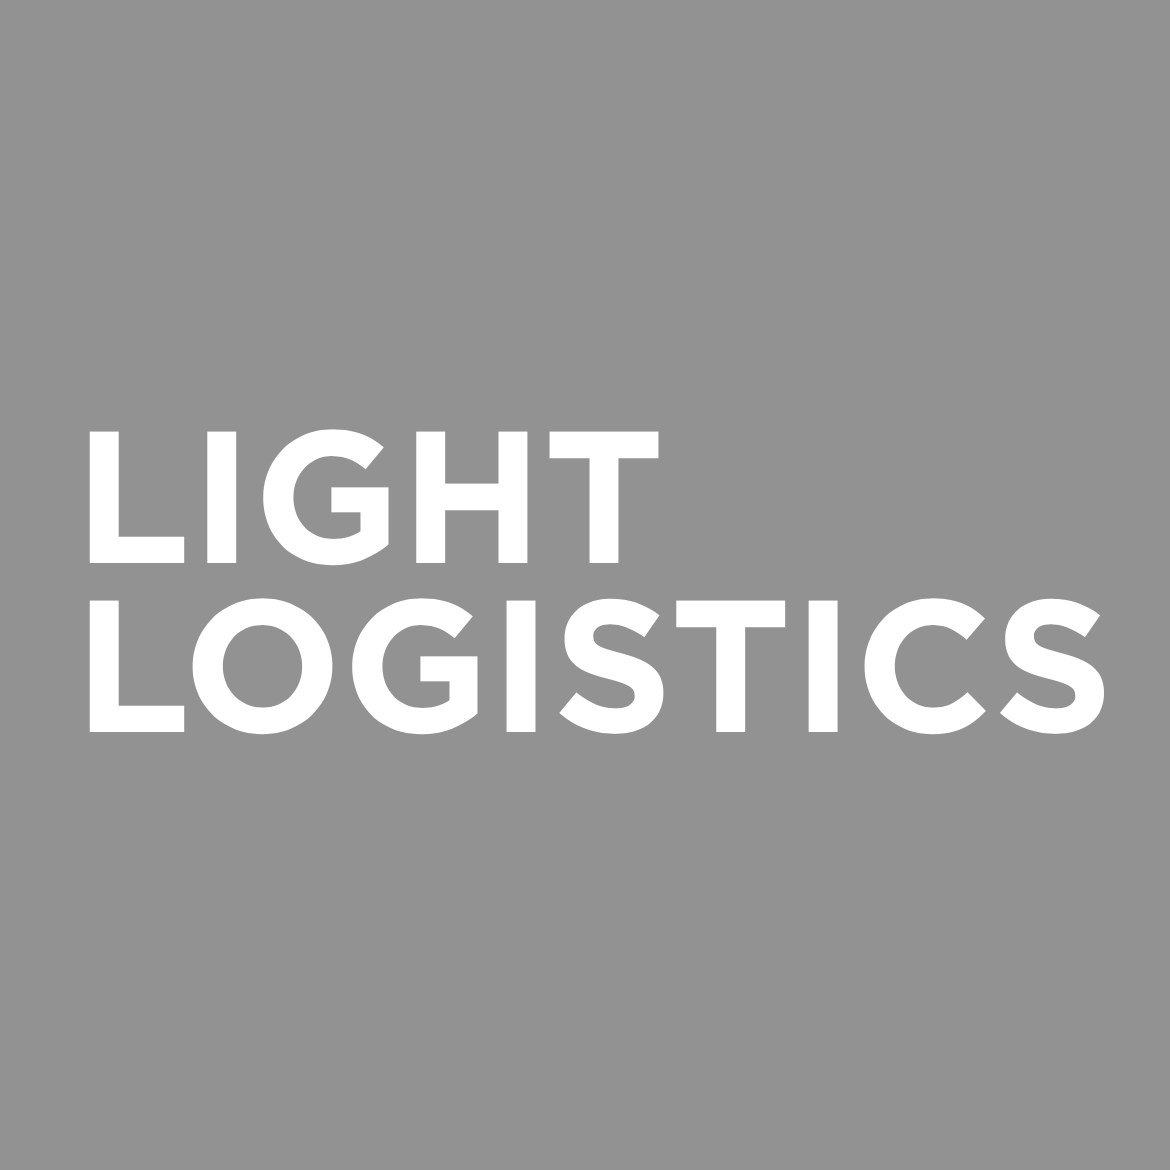 Light Logistics